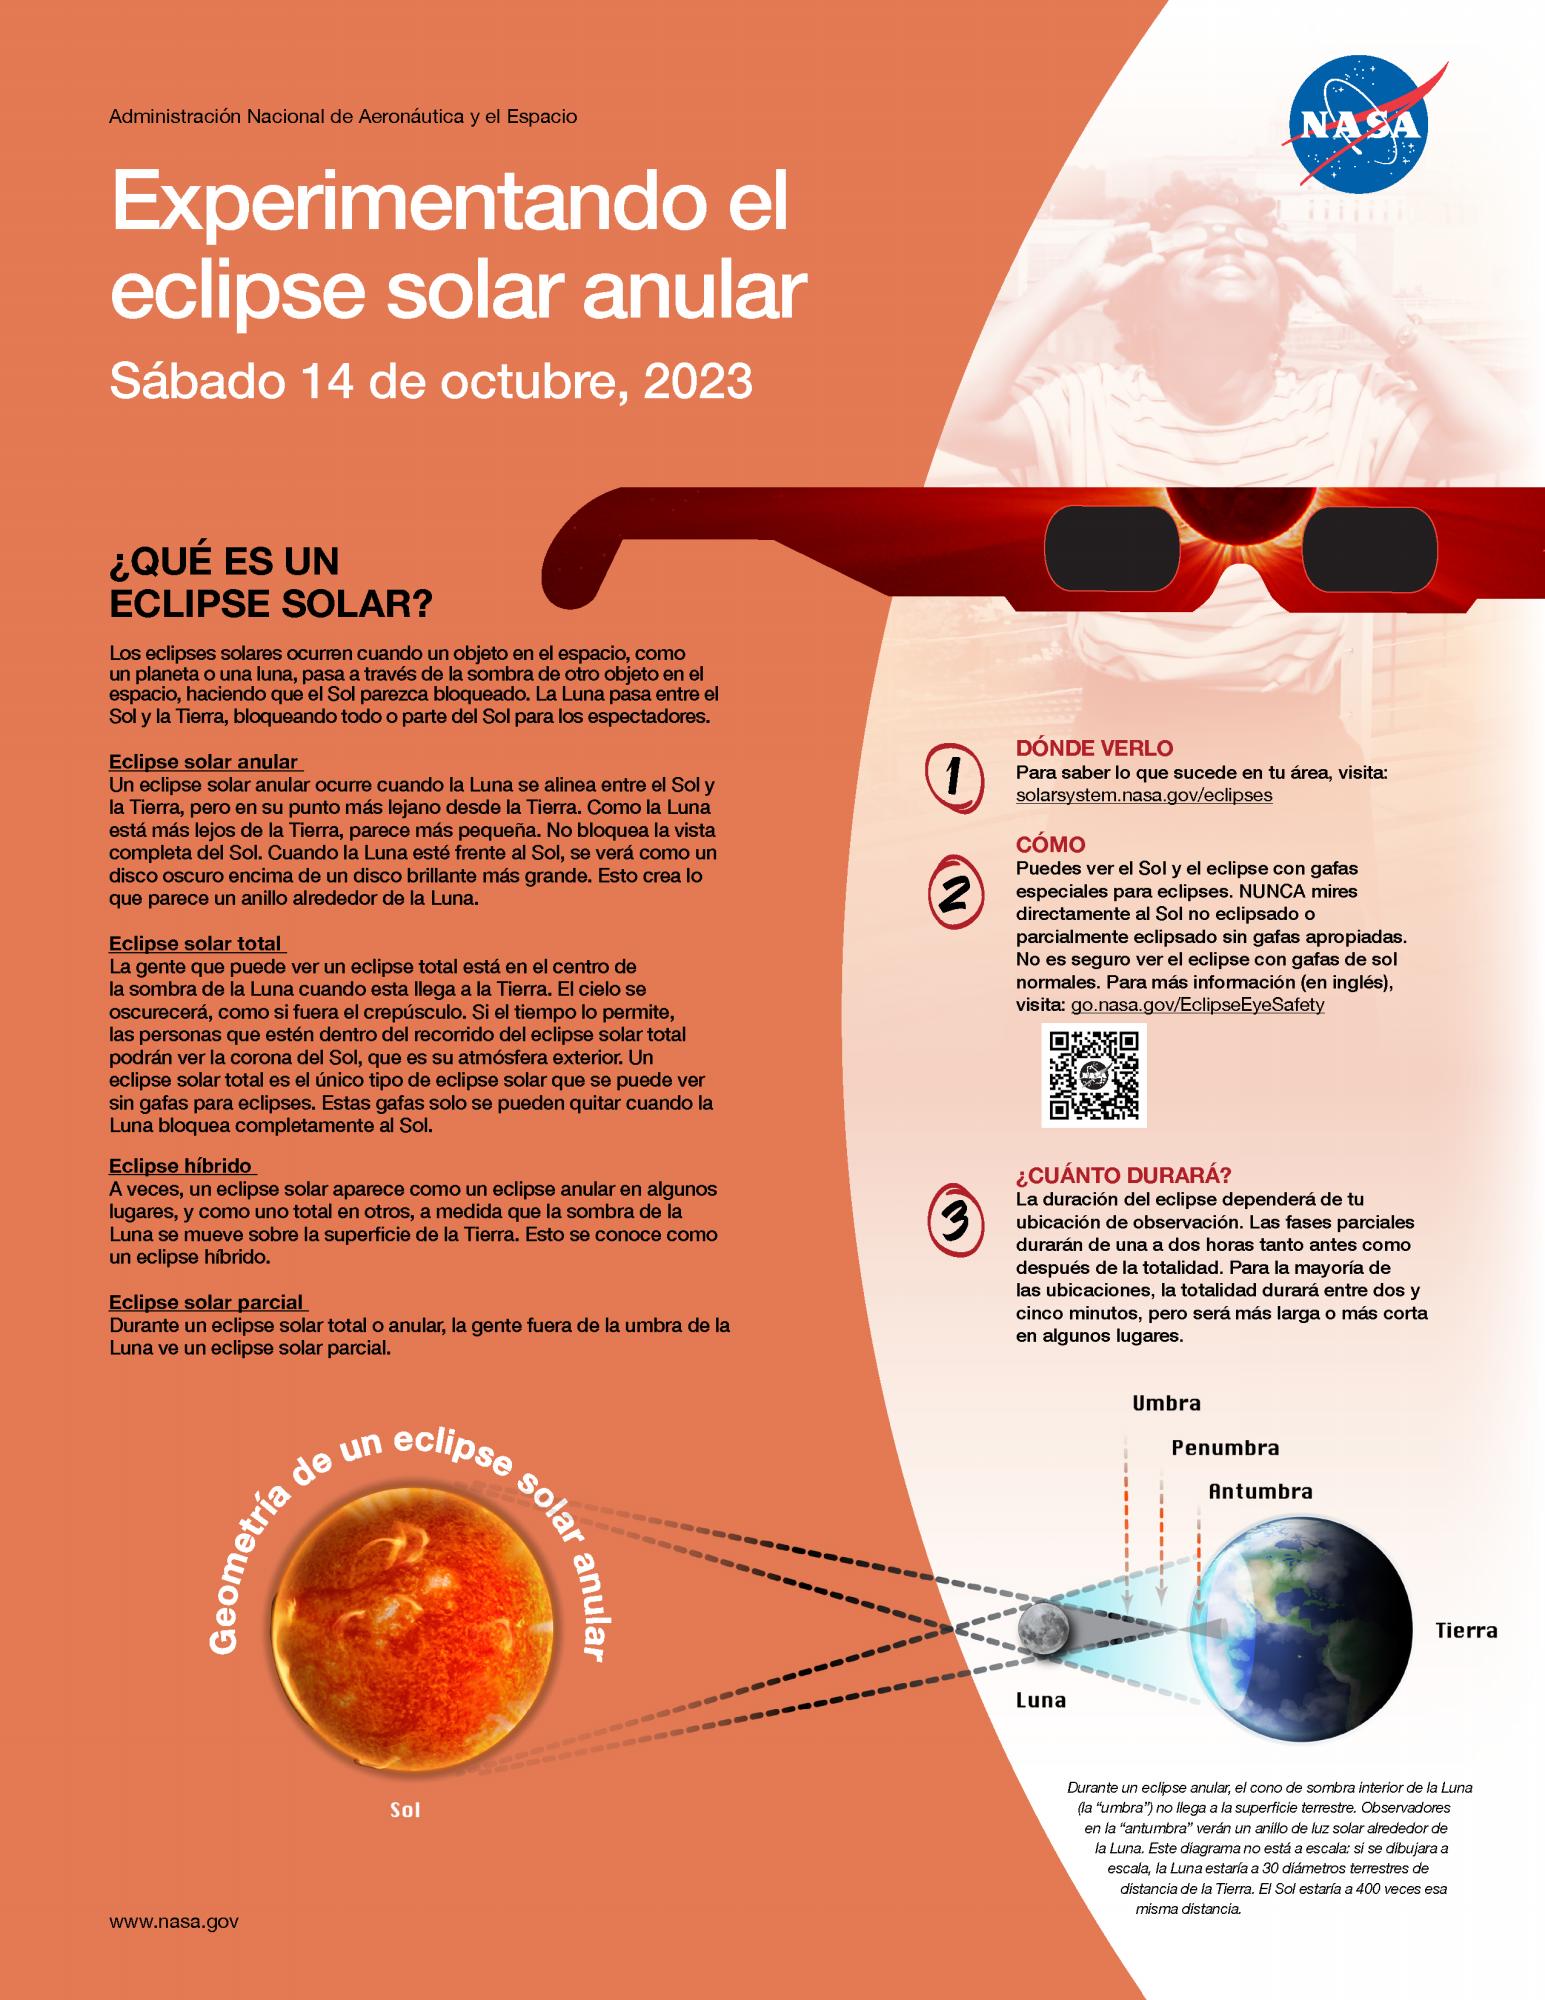 ¿El próximo eclipse lunar se verá desde Centroamérica?